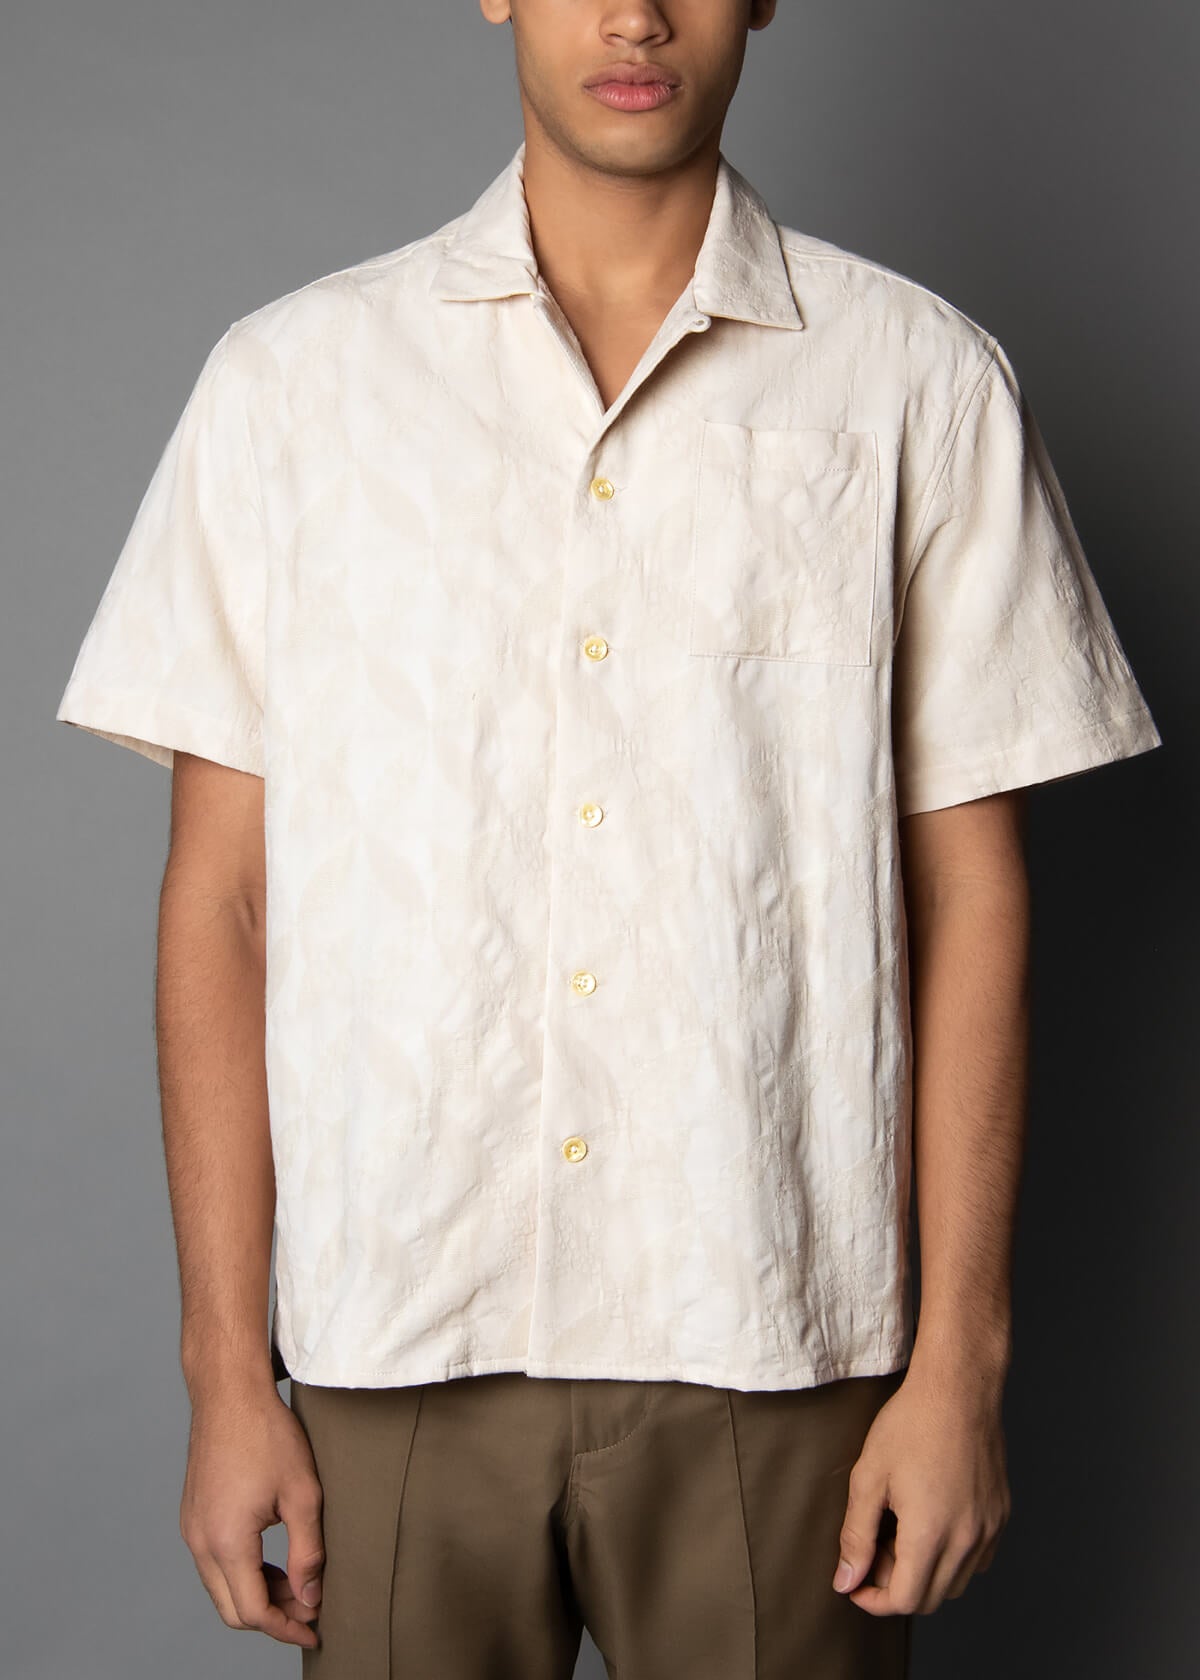 woven jacquard fabric cream short sleeve mens shirt 